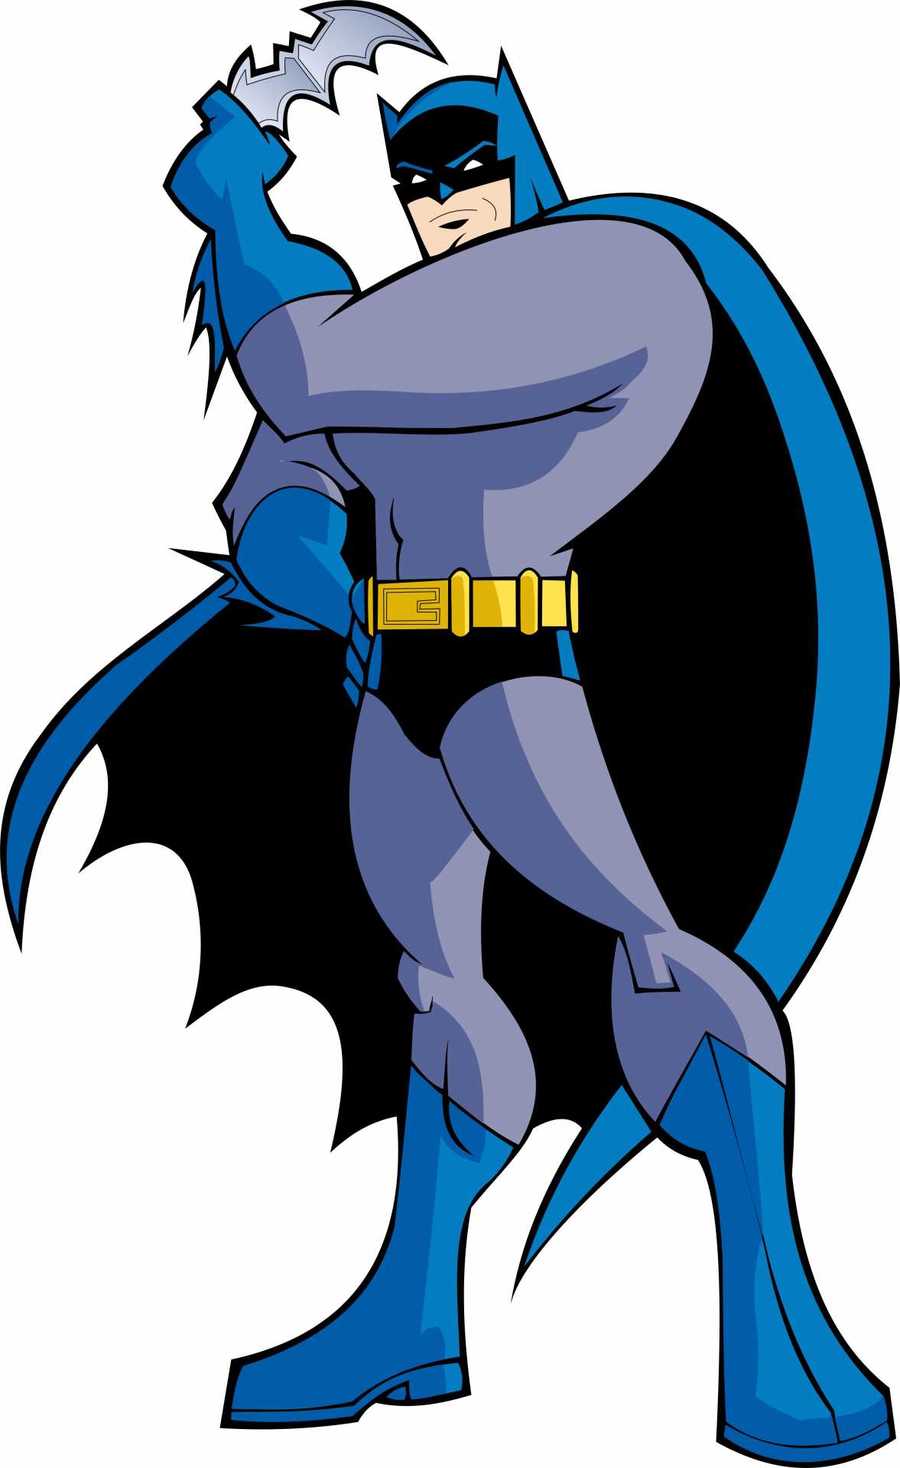 Batman cartoon graphics illustration. Brave clipart superhero